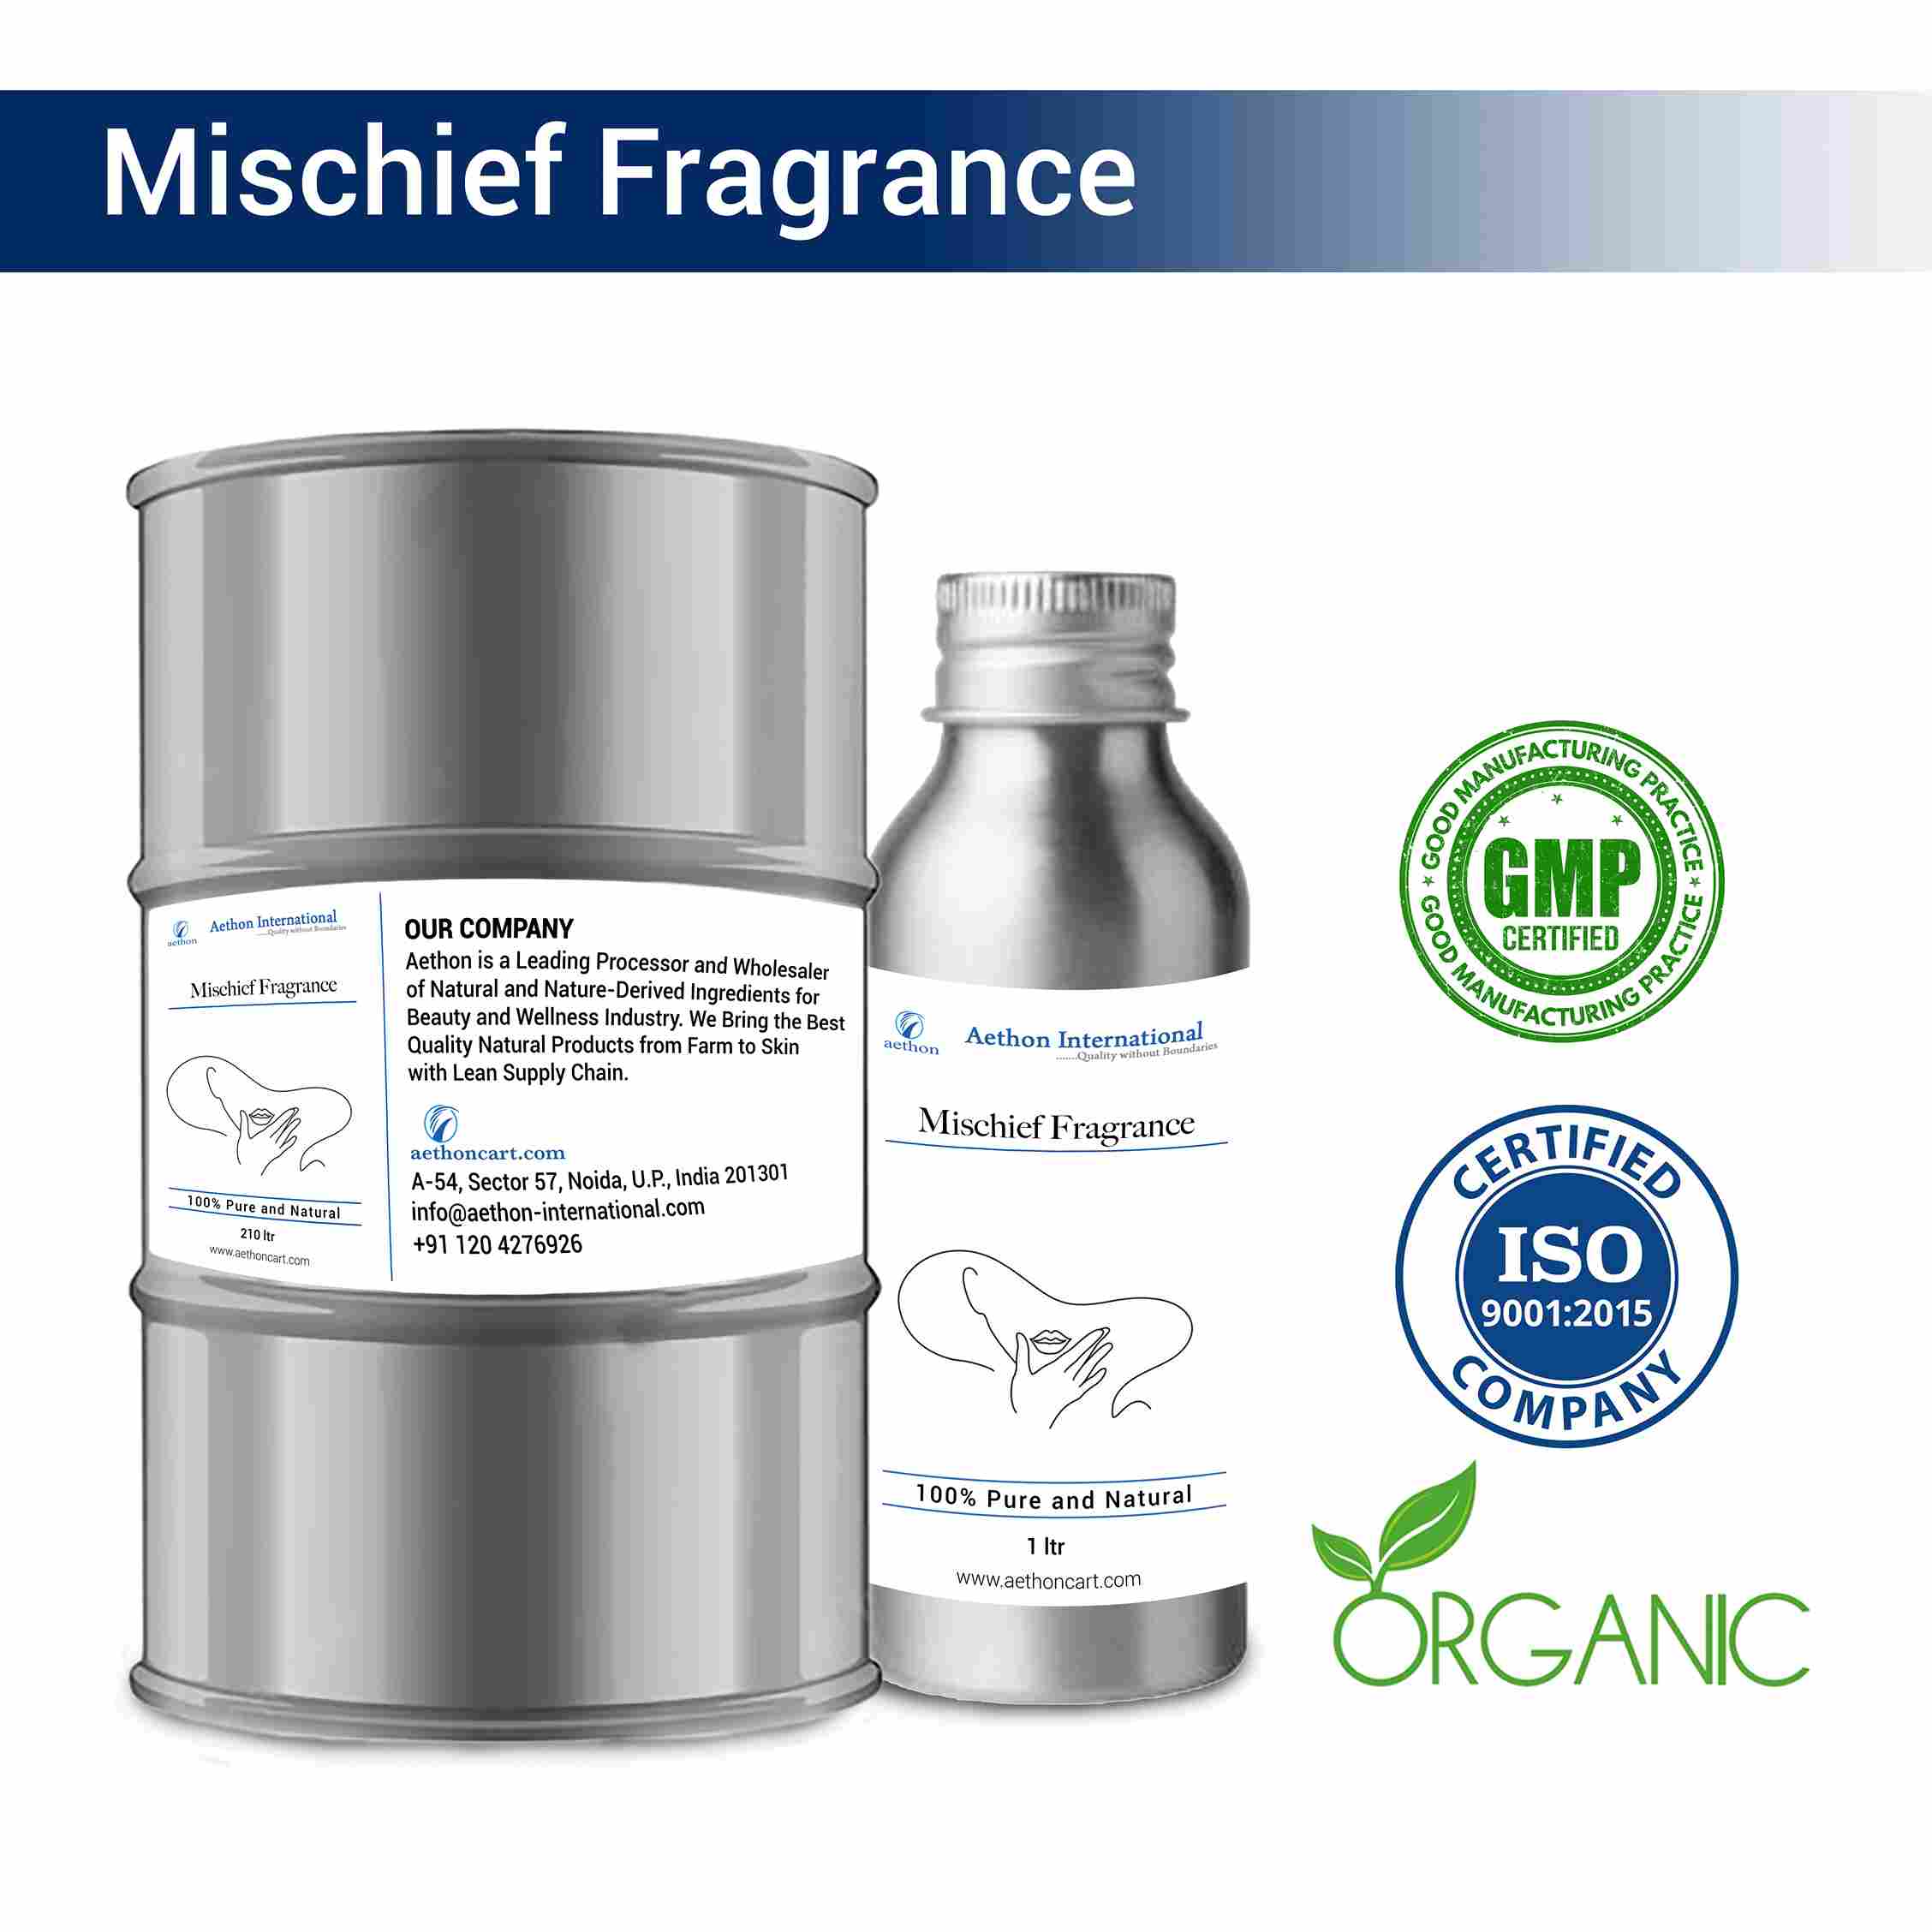 Mischief Fragrance